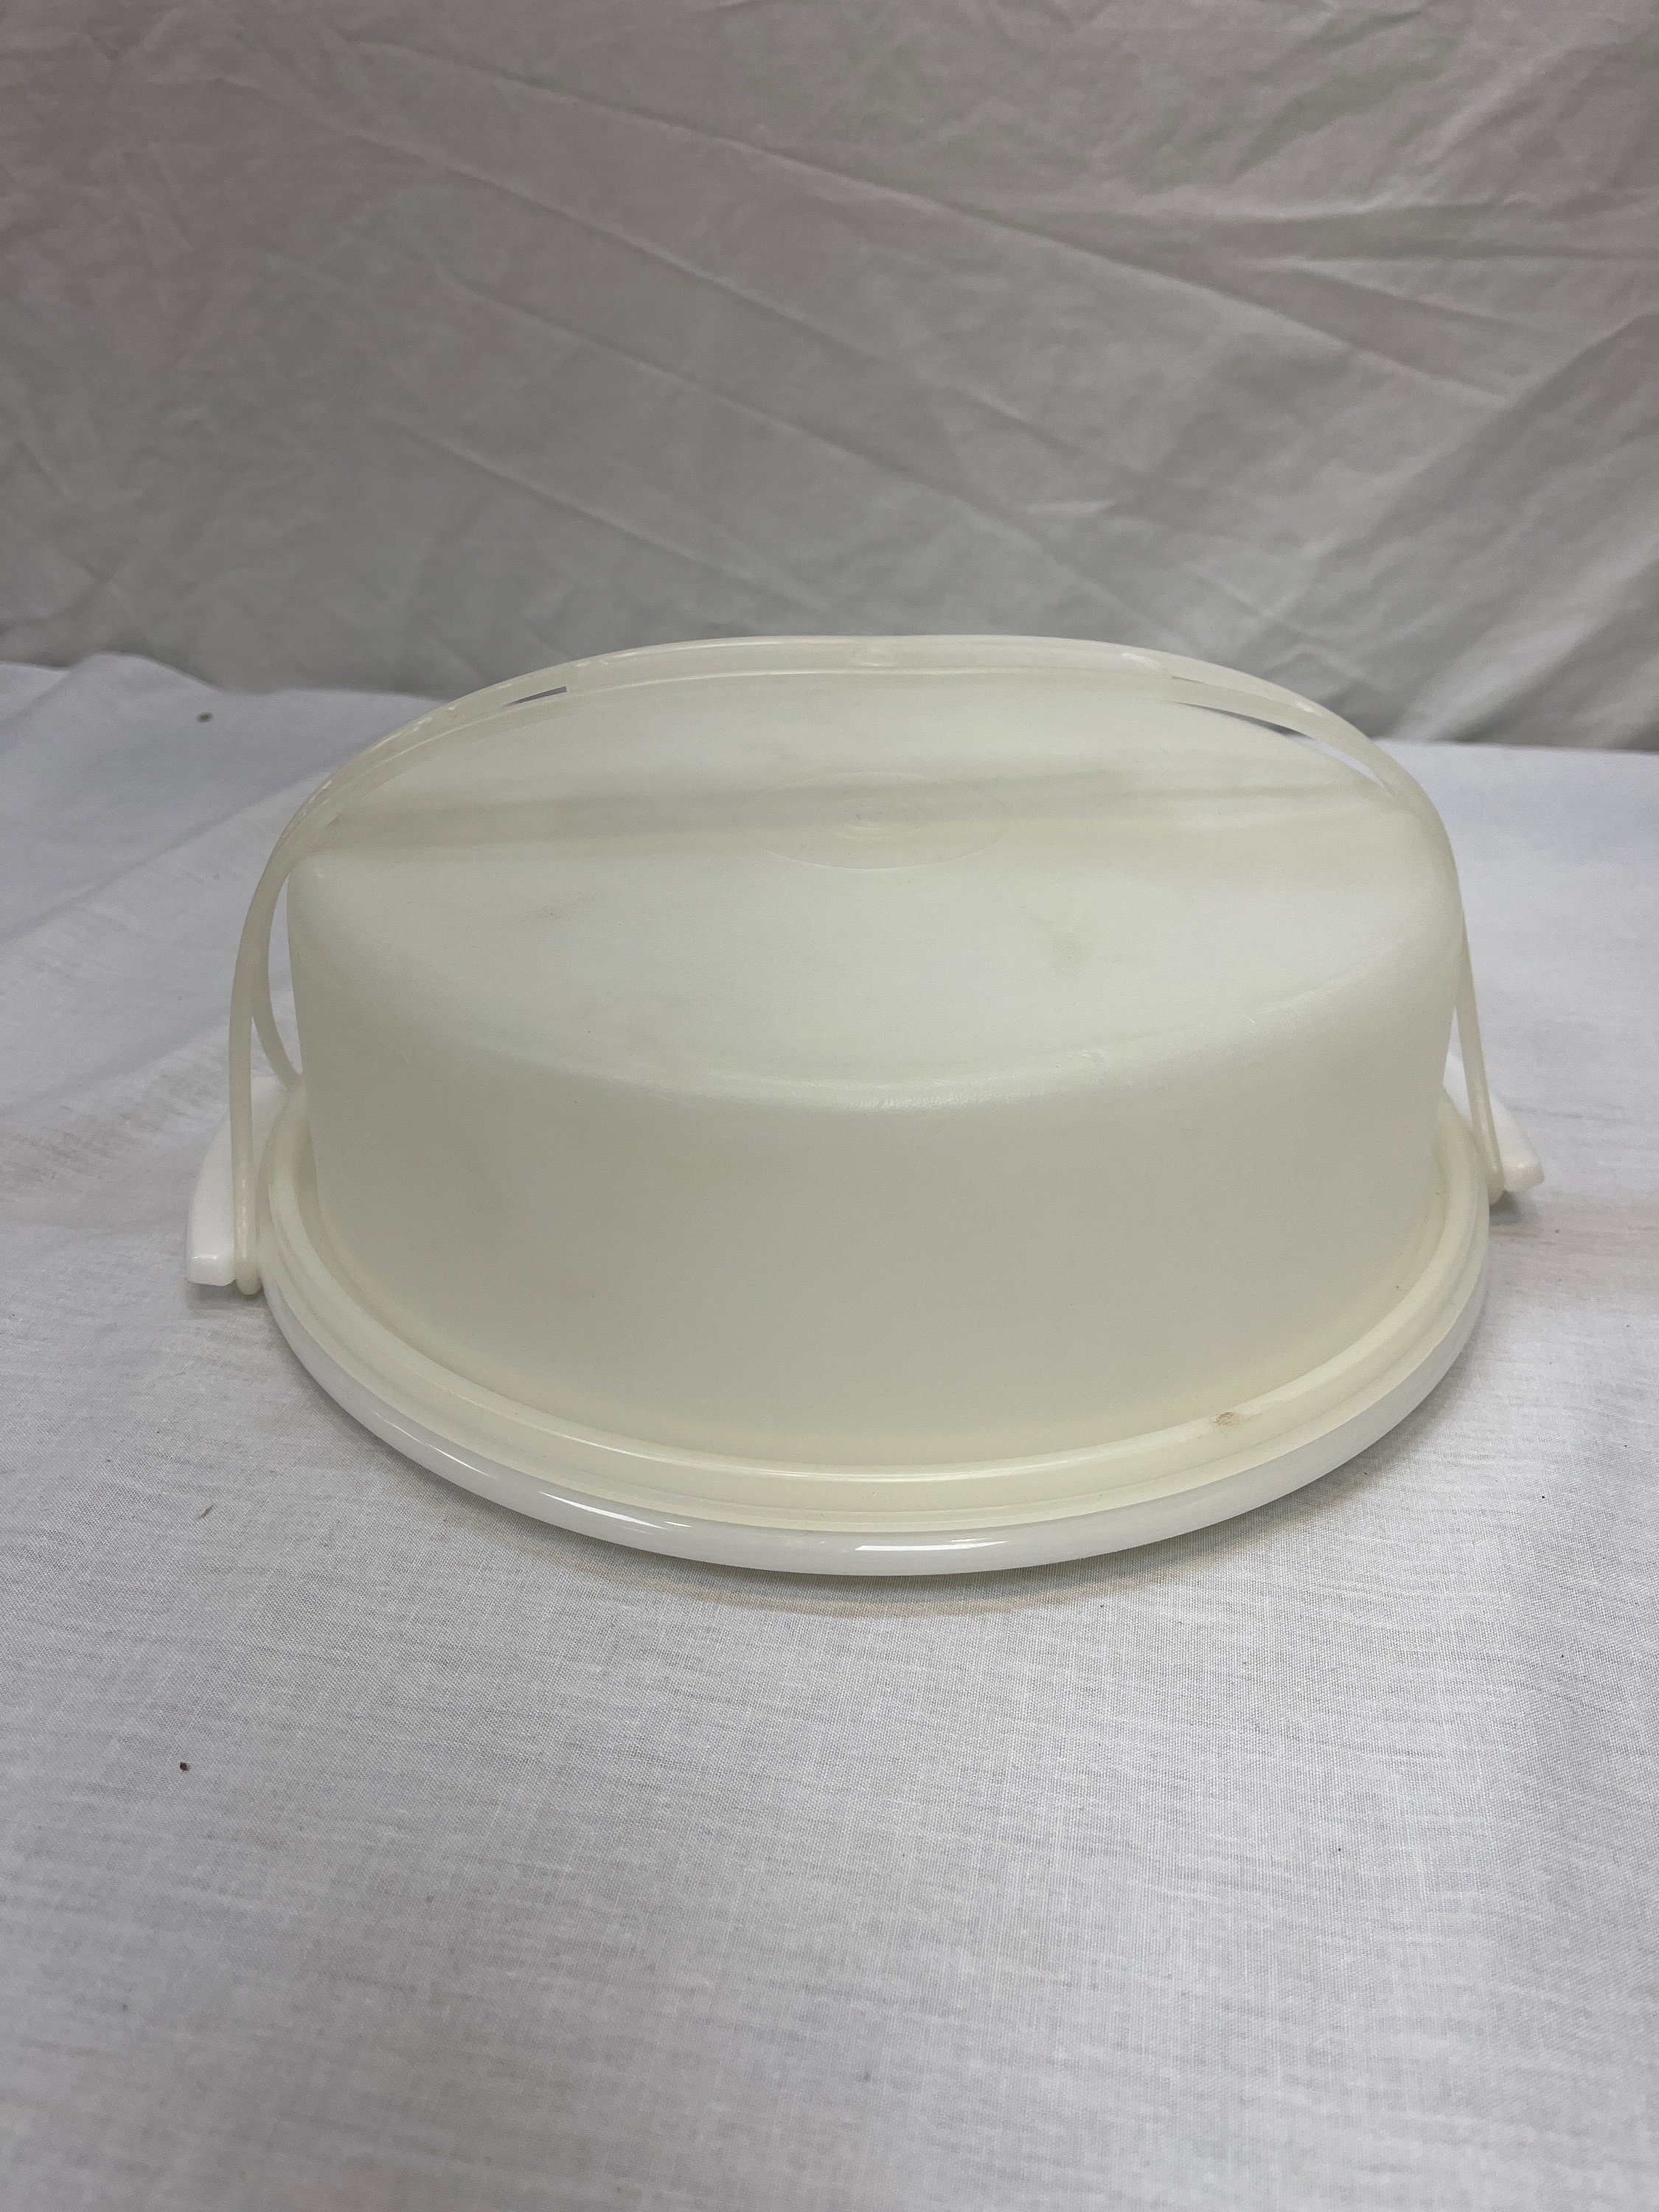 Vintage Tupperware Rectangular Cake Carrier Lid White 9x13 No Handle 622-1  623-1